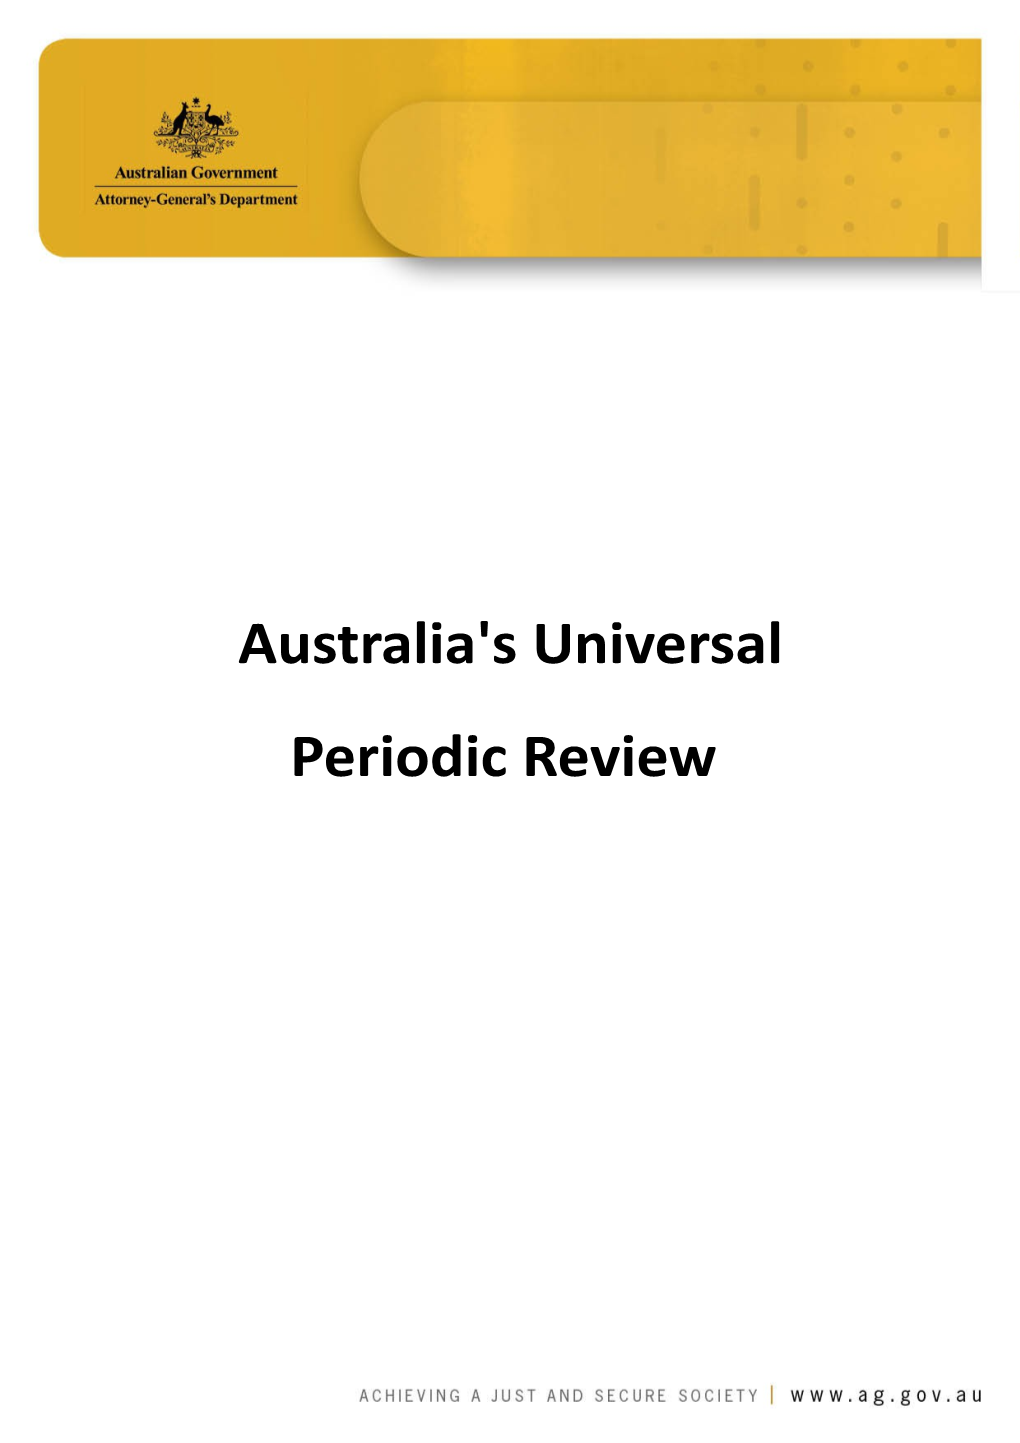 Australia's Universal Periodic Review